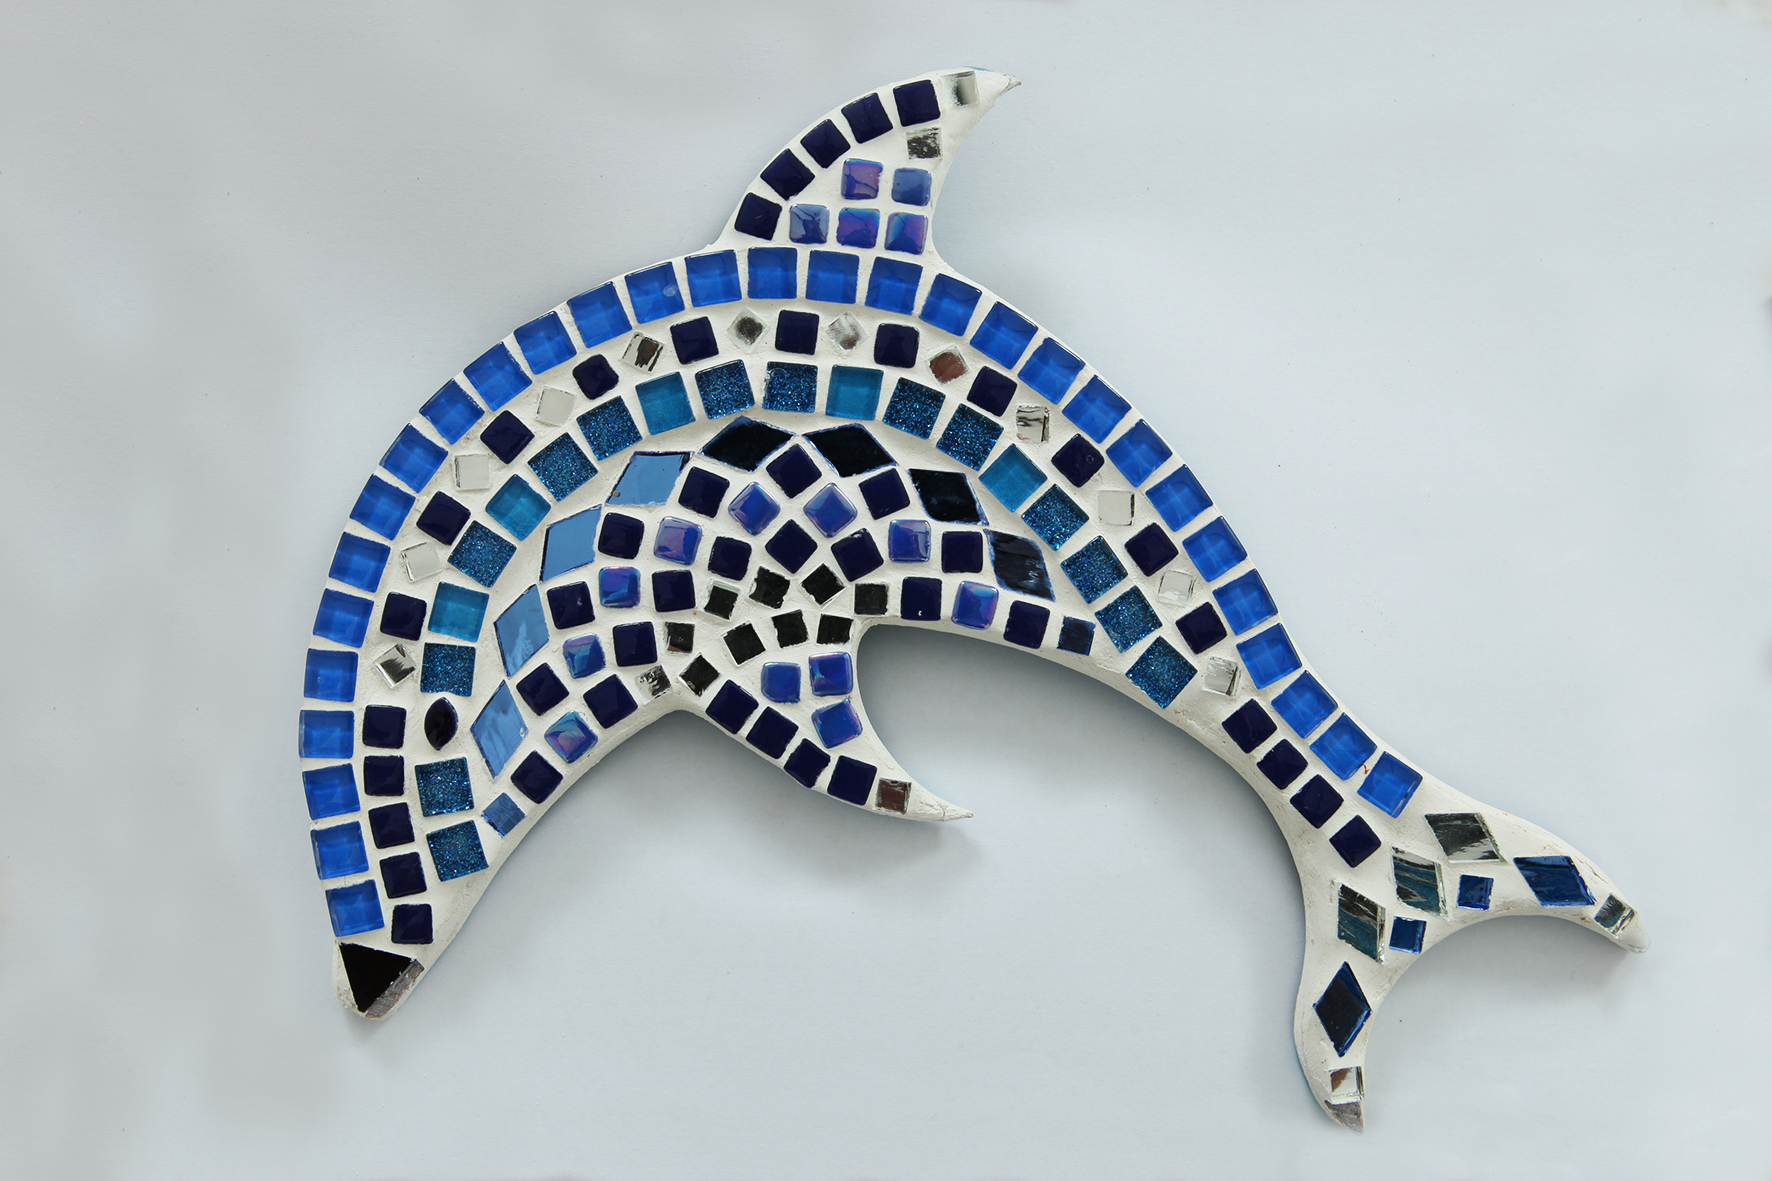 Dolphin mosaic tile kit